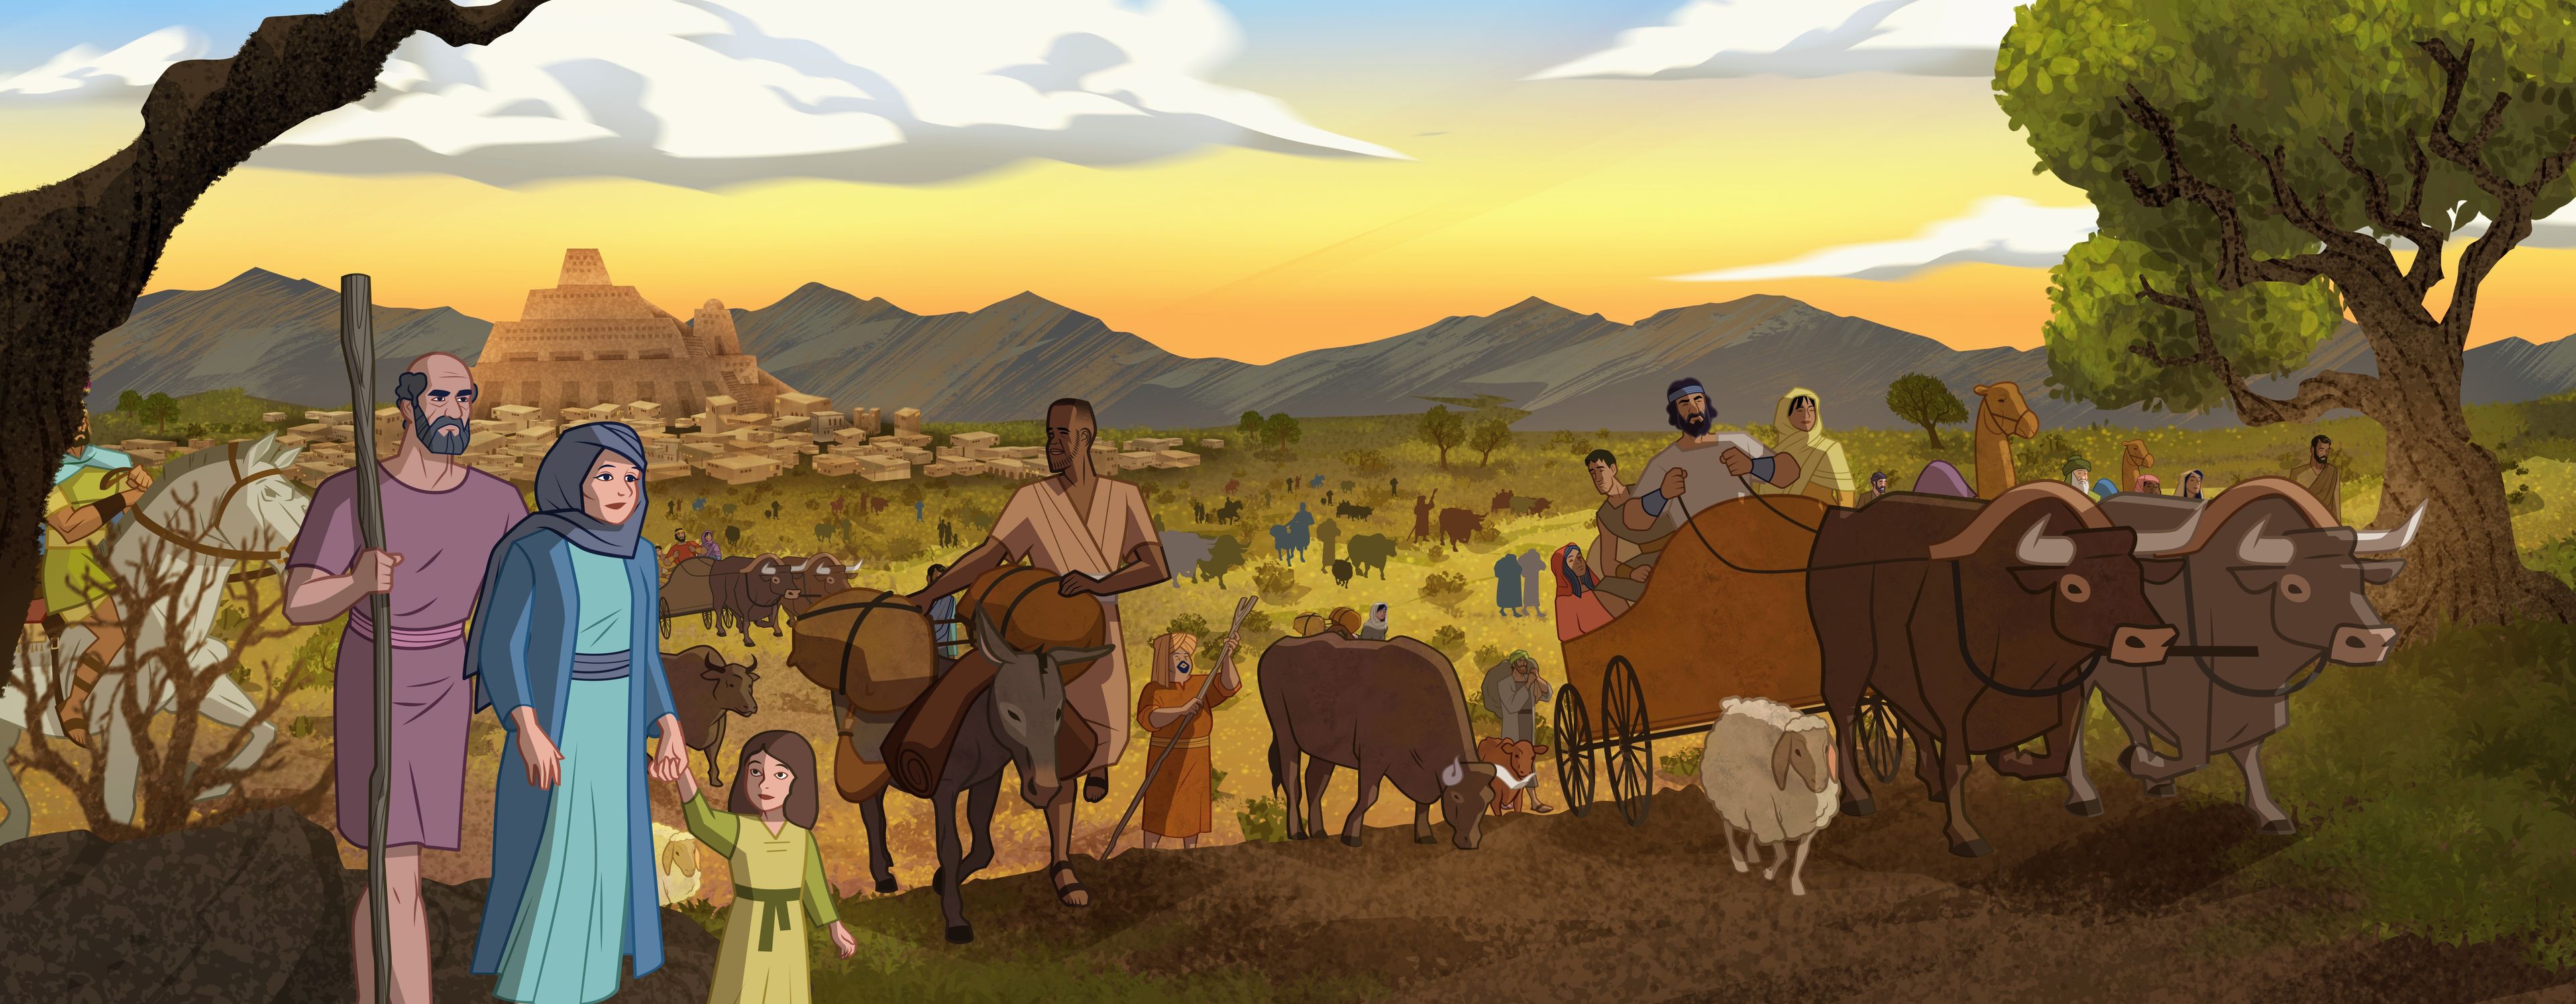 Illustration of people leaving. Genesis 11:9